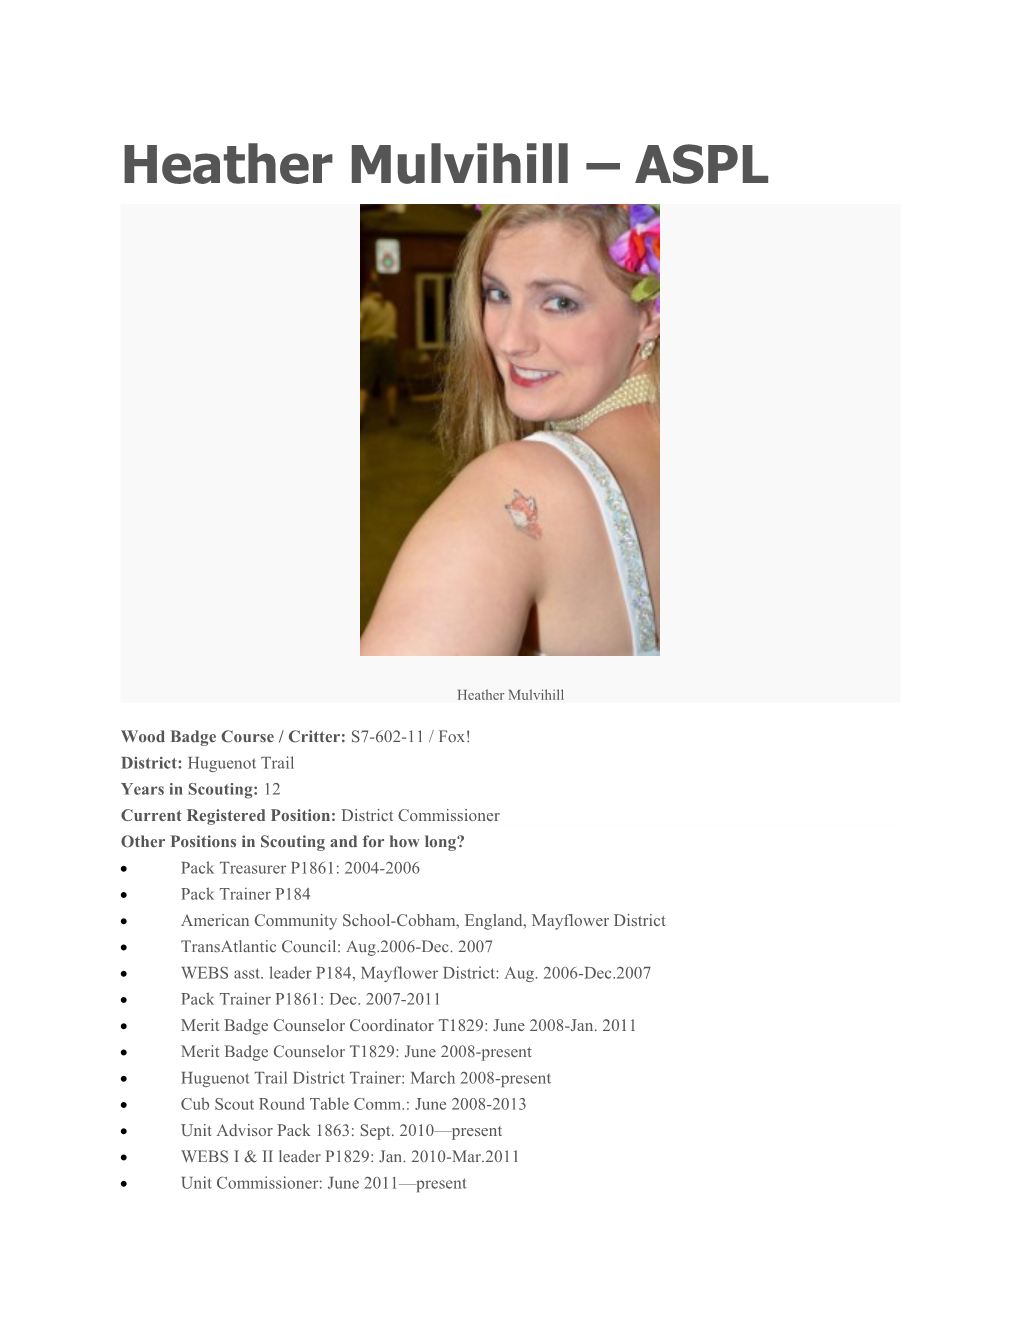 Heather Mulvihill ASPL